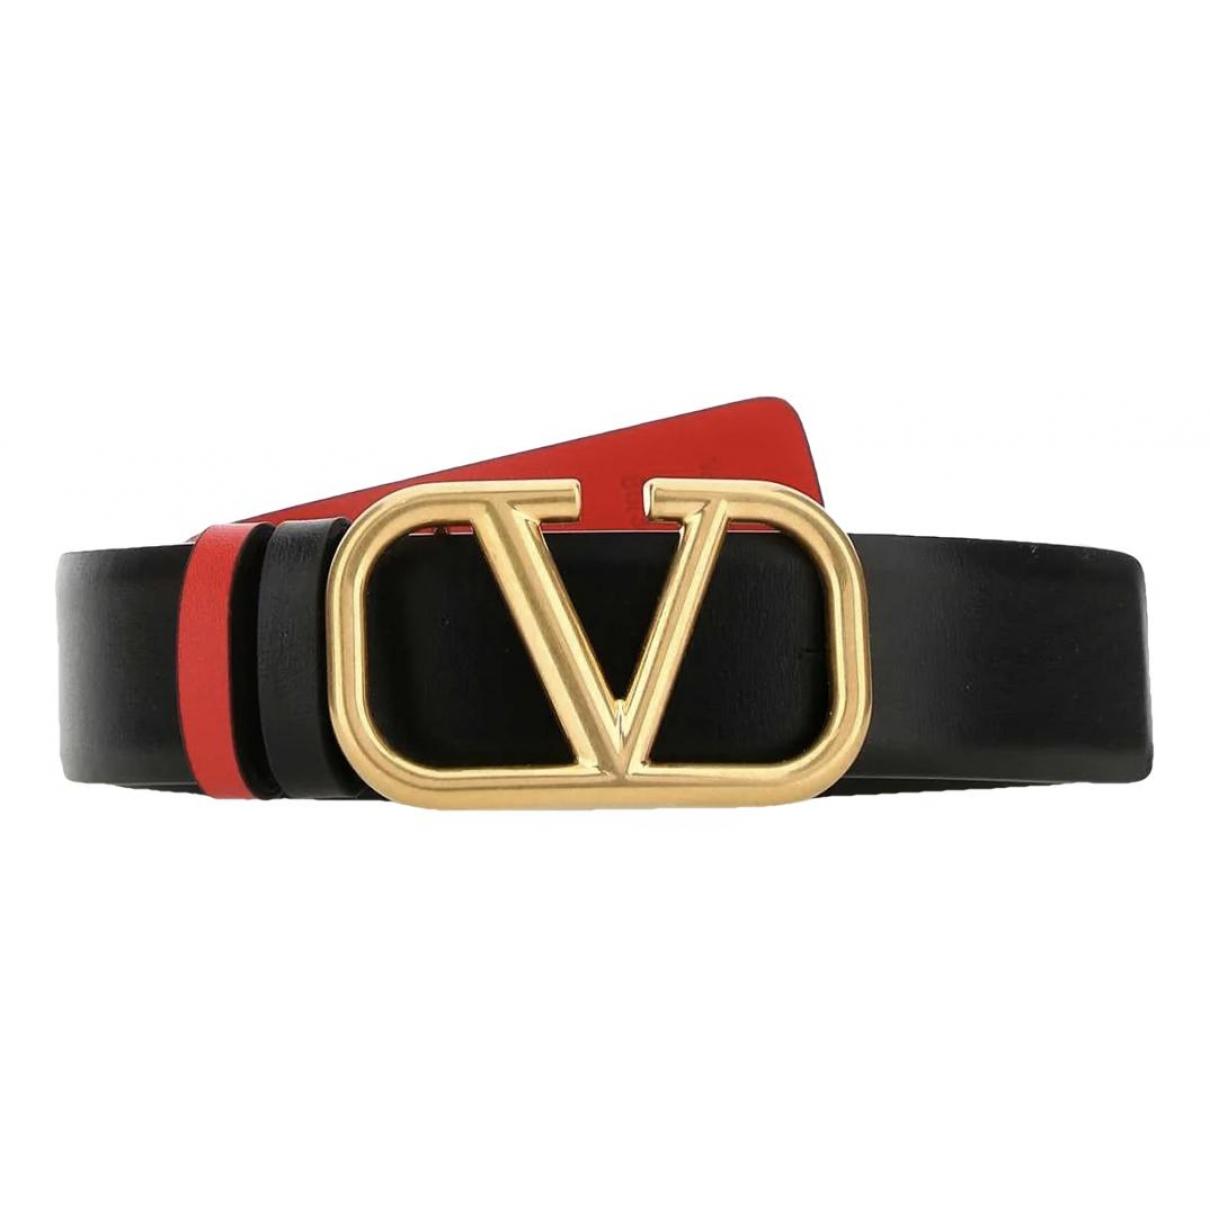 VLogo leather belt - 1